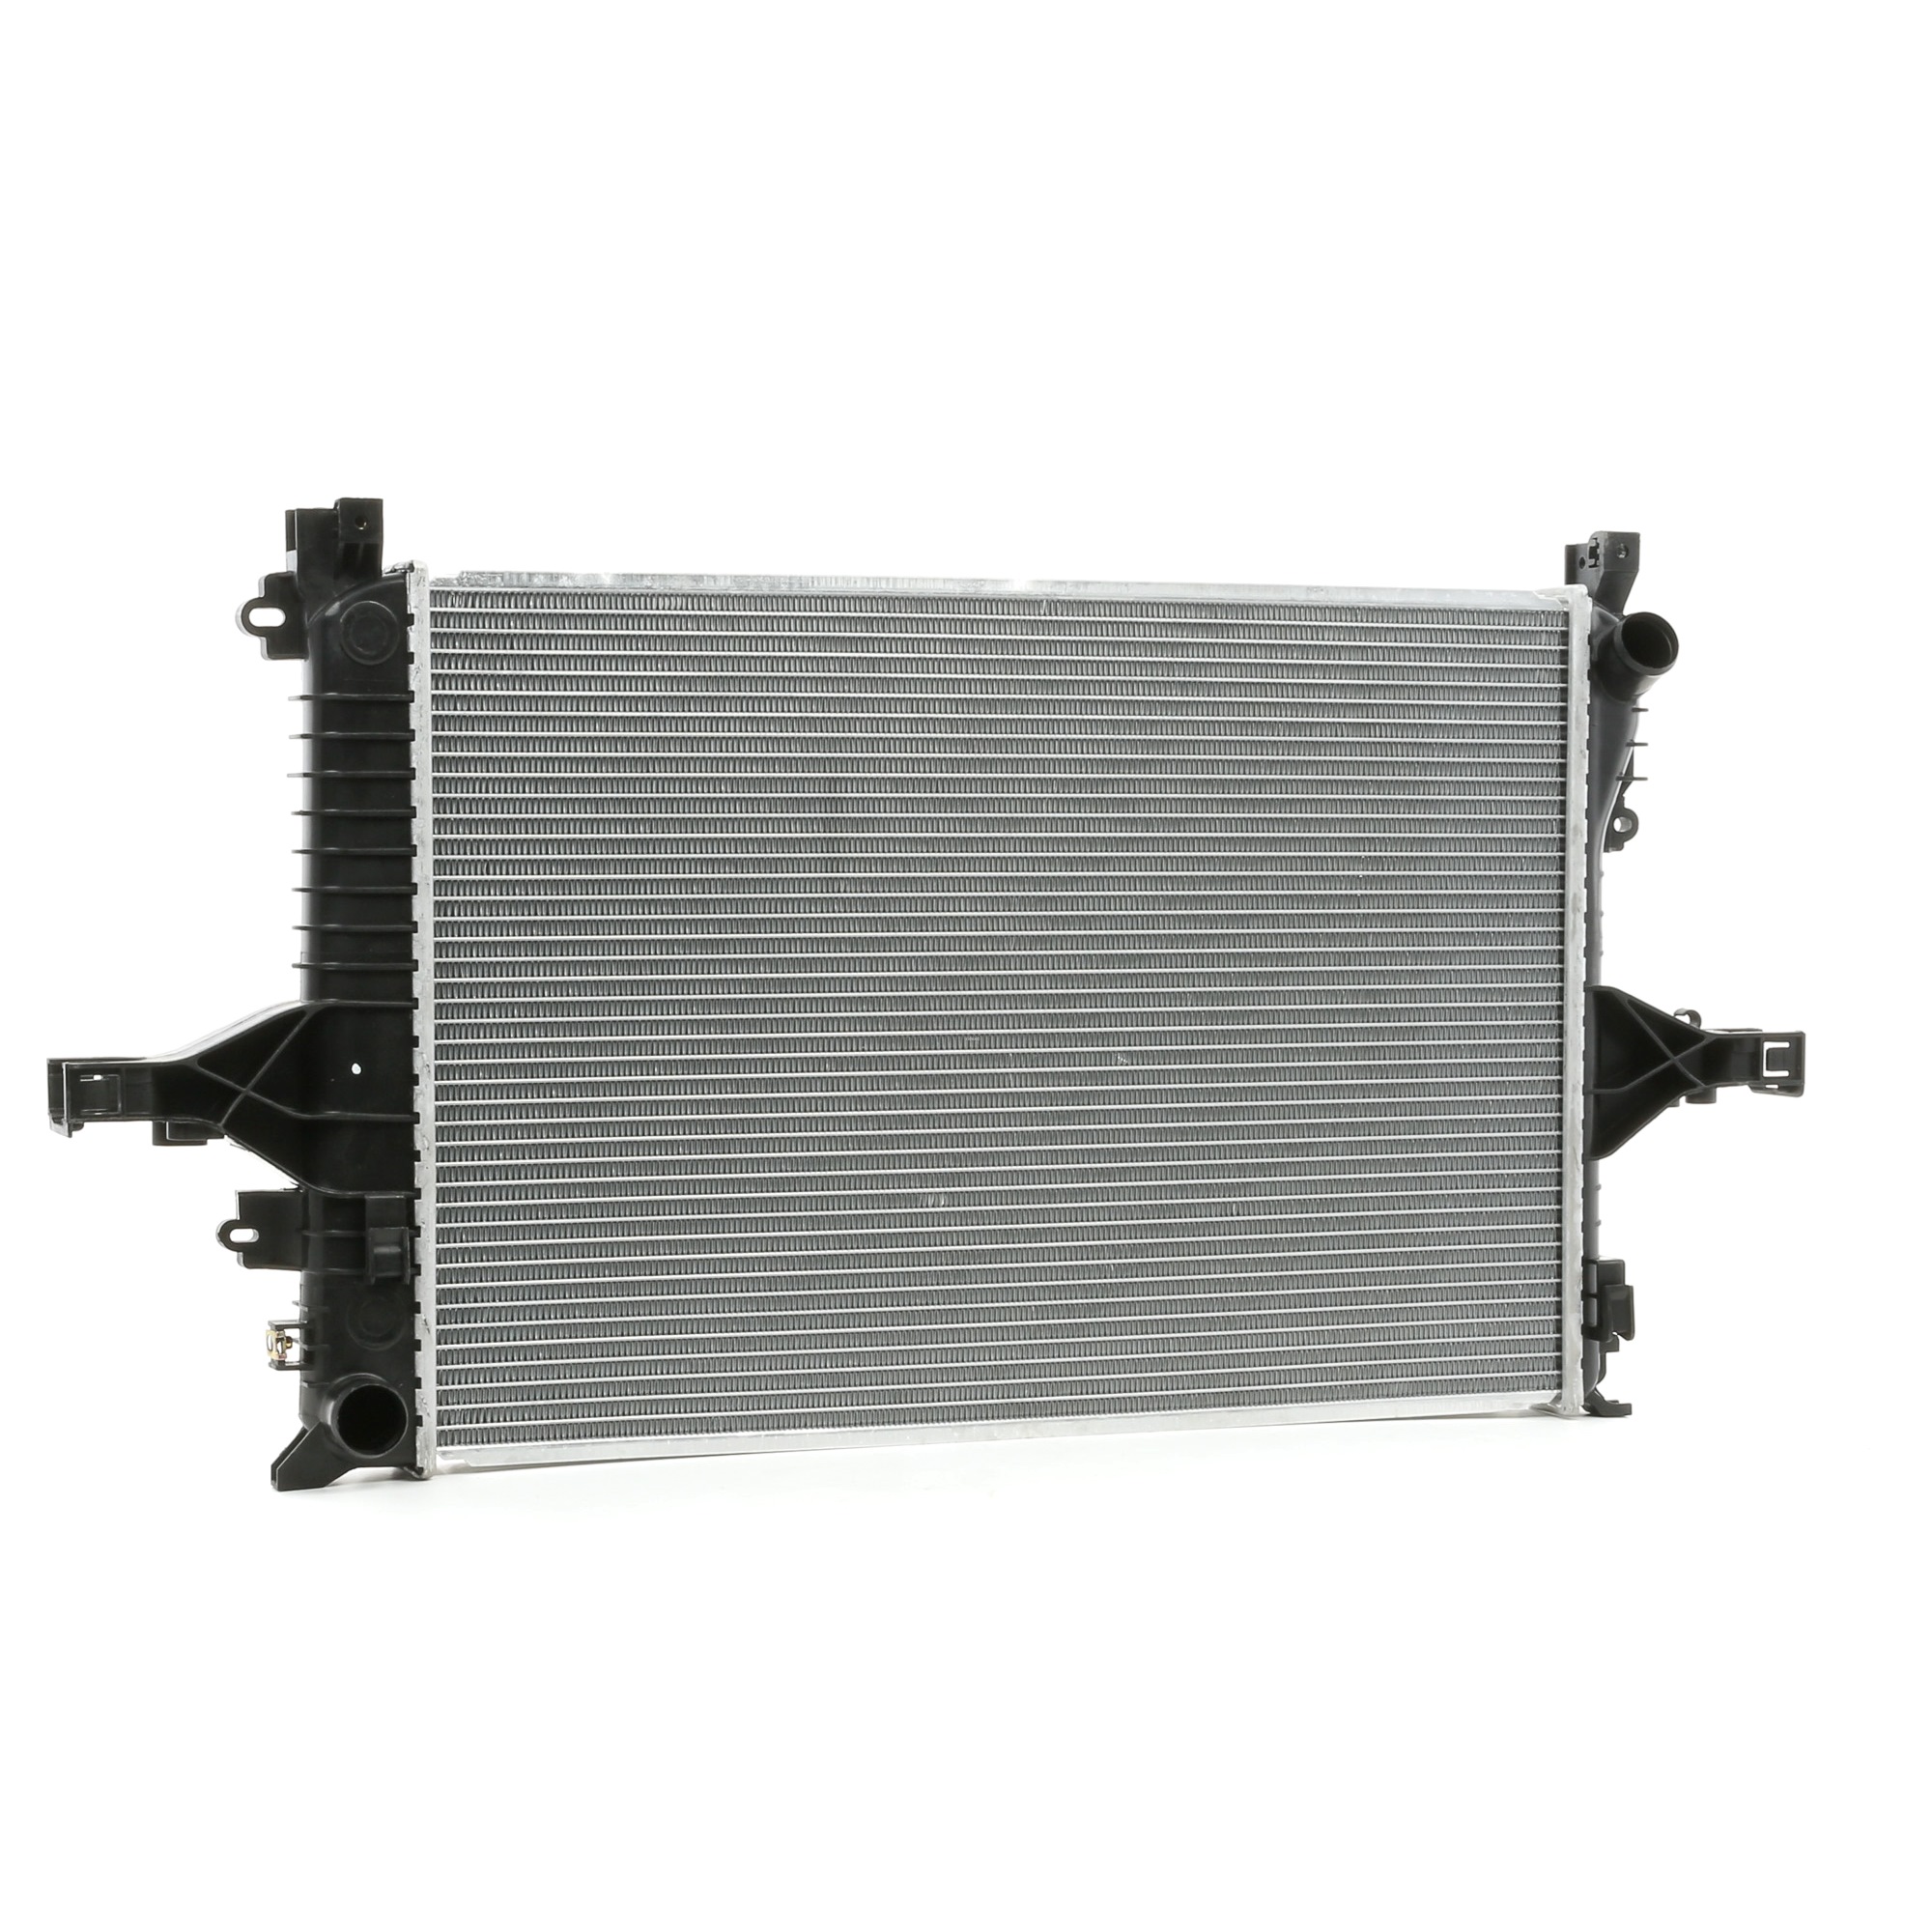 RIDEX 470R0211 Engine radiator Aluminium, 620 x 422 x 40 mm, without frame, Brazed cooling fins